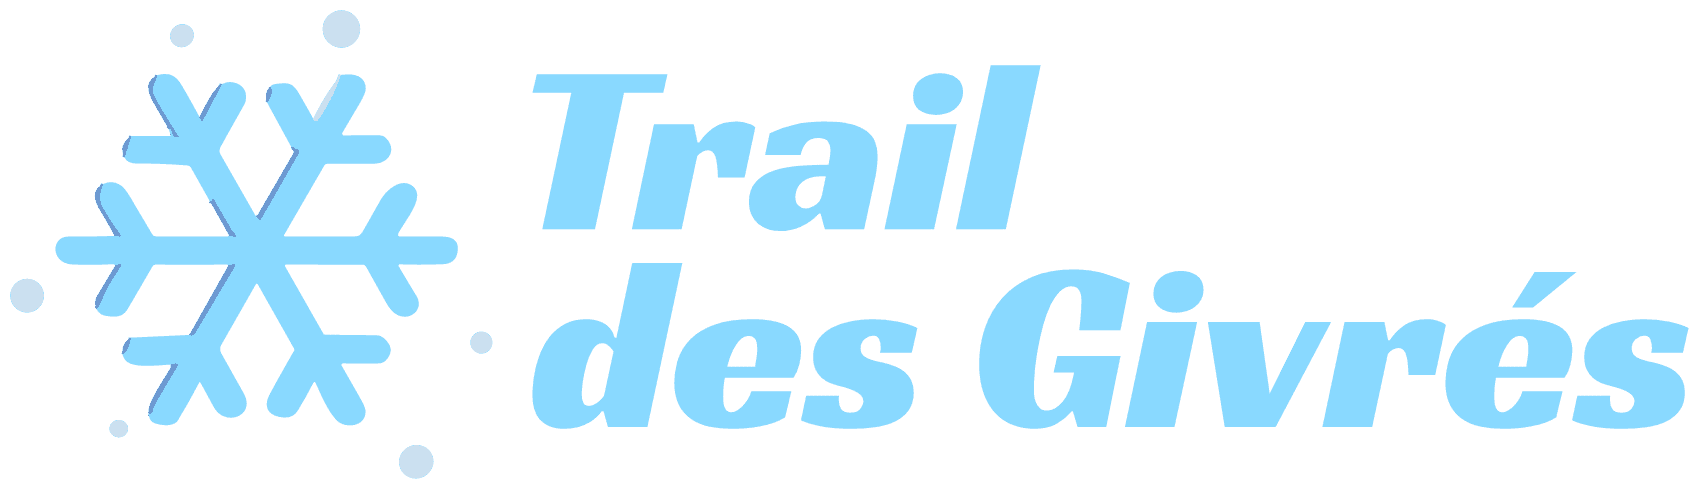 Trail-des-Givres-Main-Logo.png